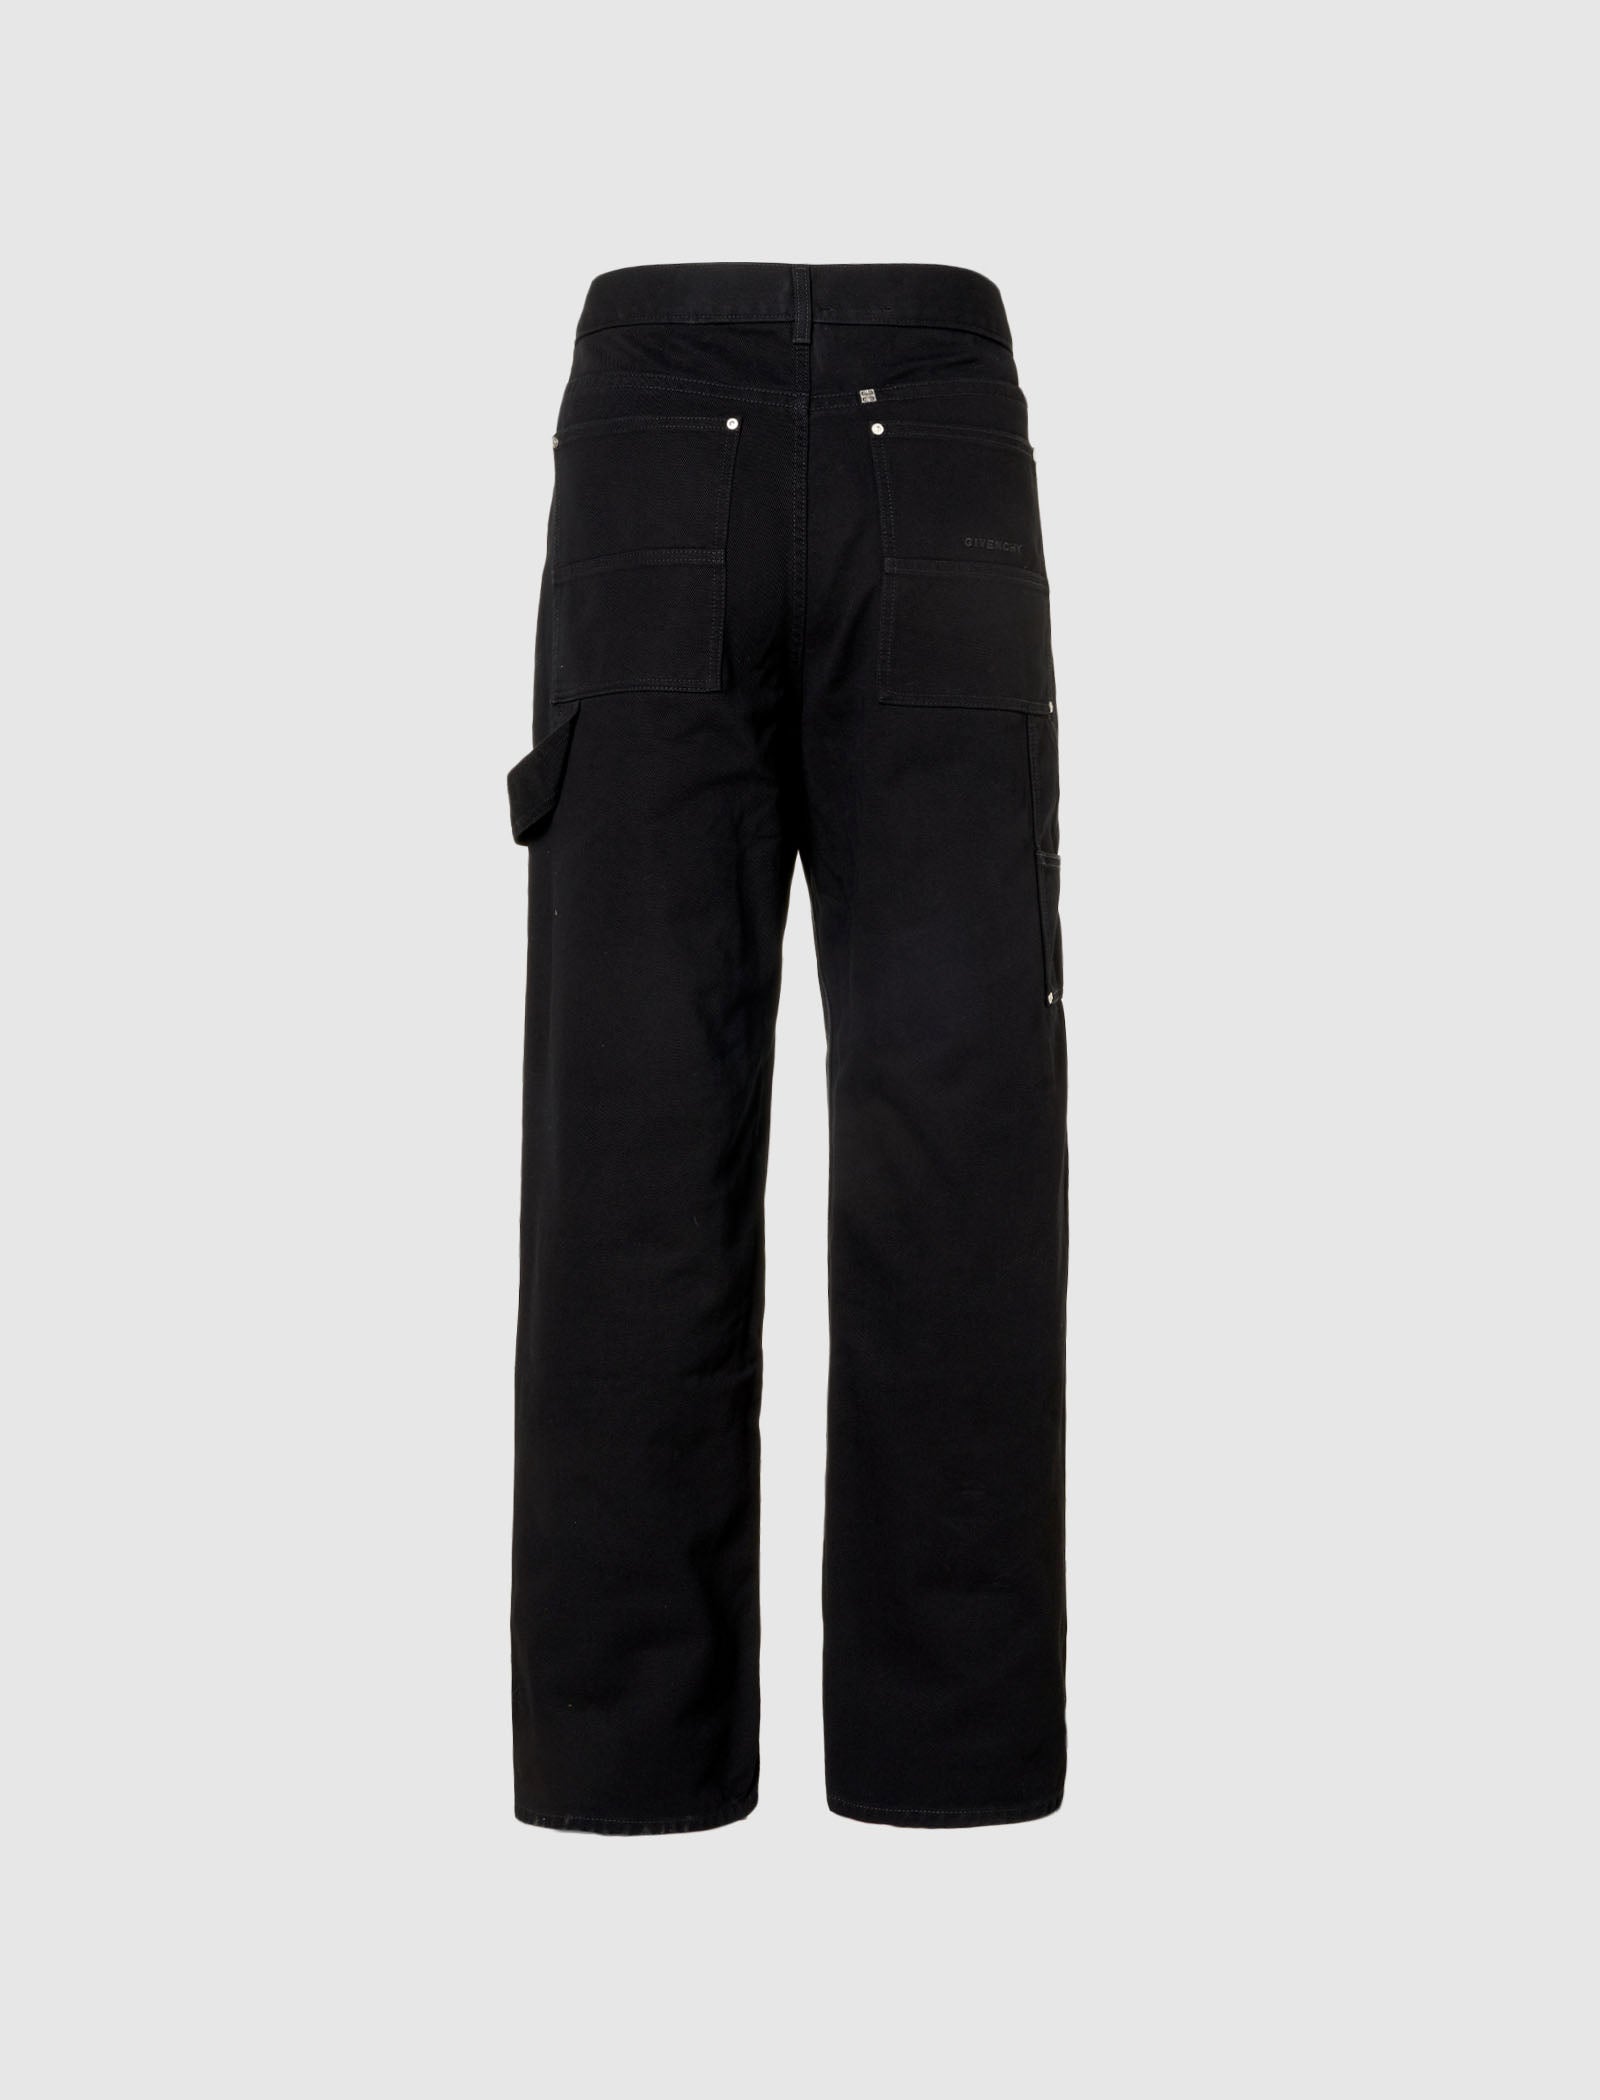 Givenchy Black Zip Cargo Pants